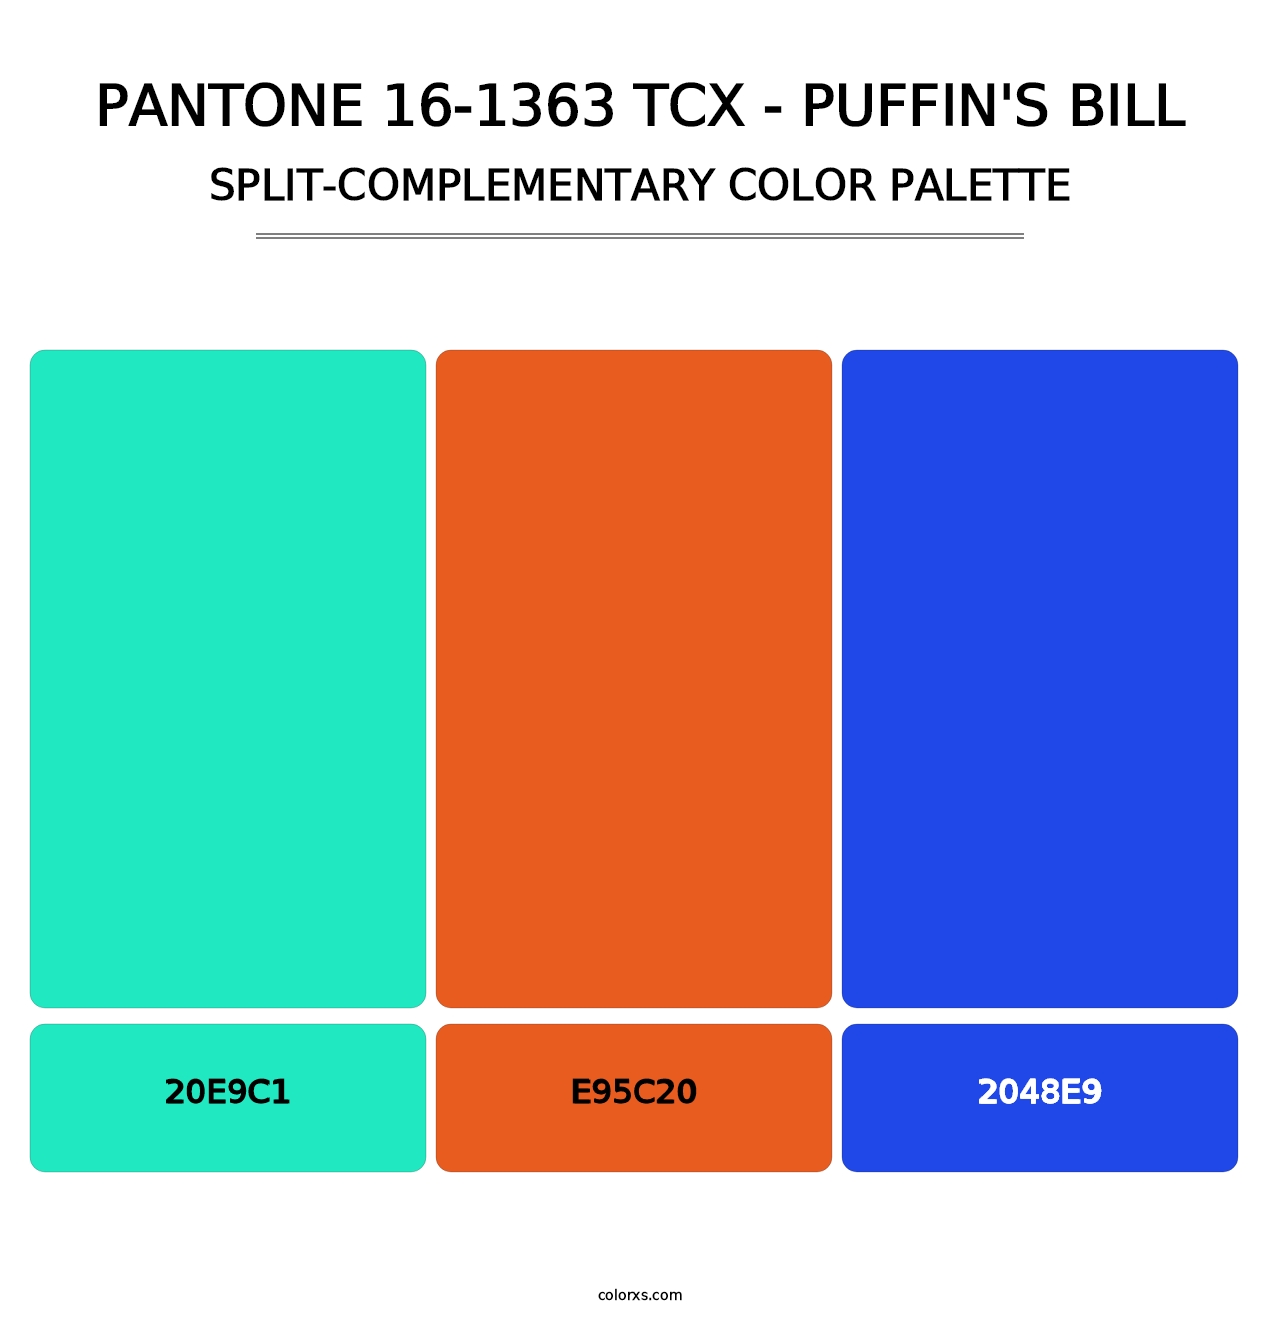 PANTONE 16-1363 TCX - Puffin's Bill - Split-Complementary Color Palette